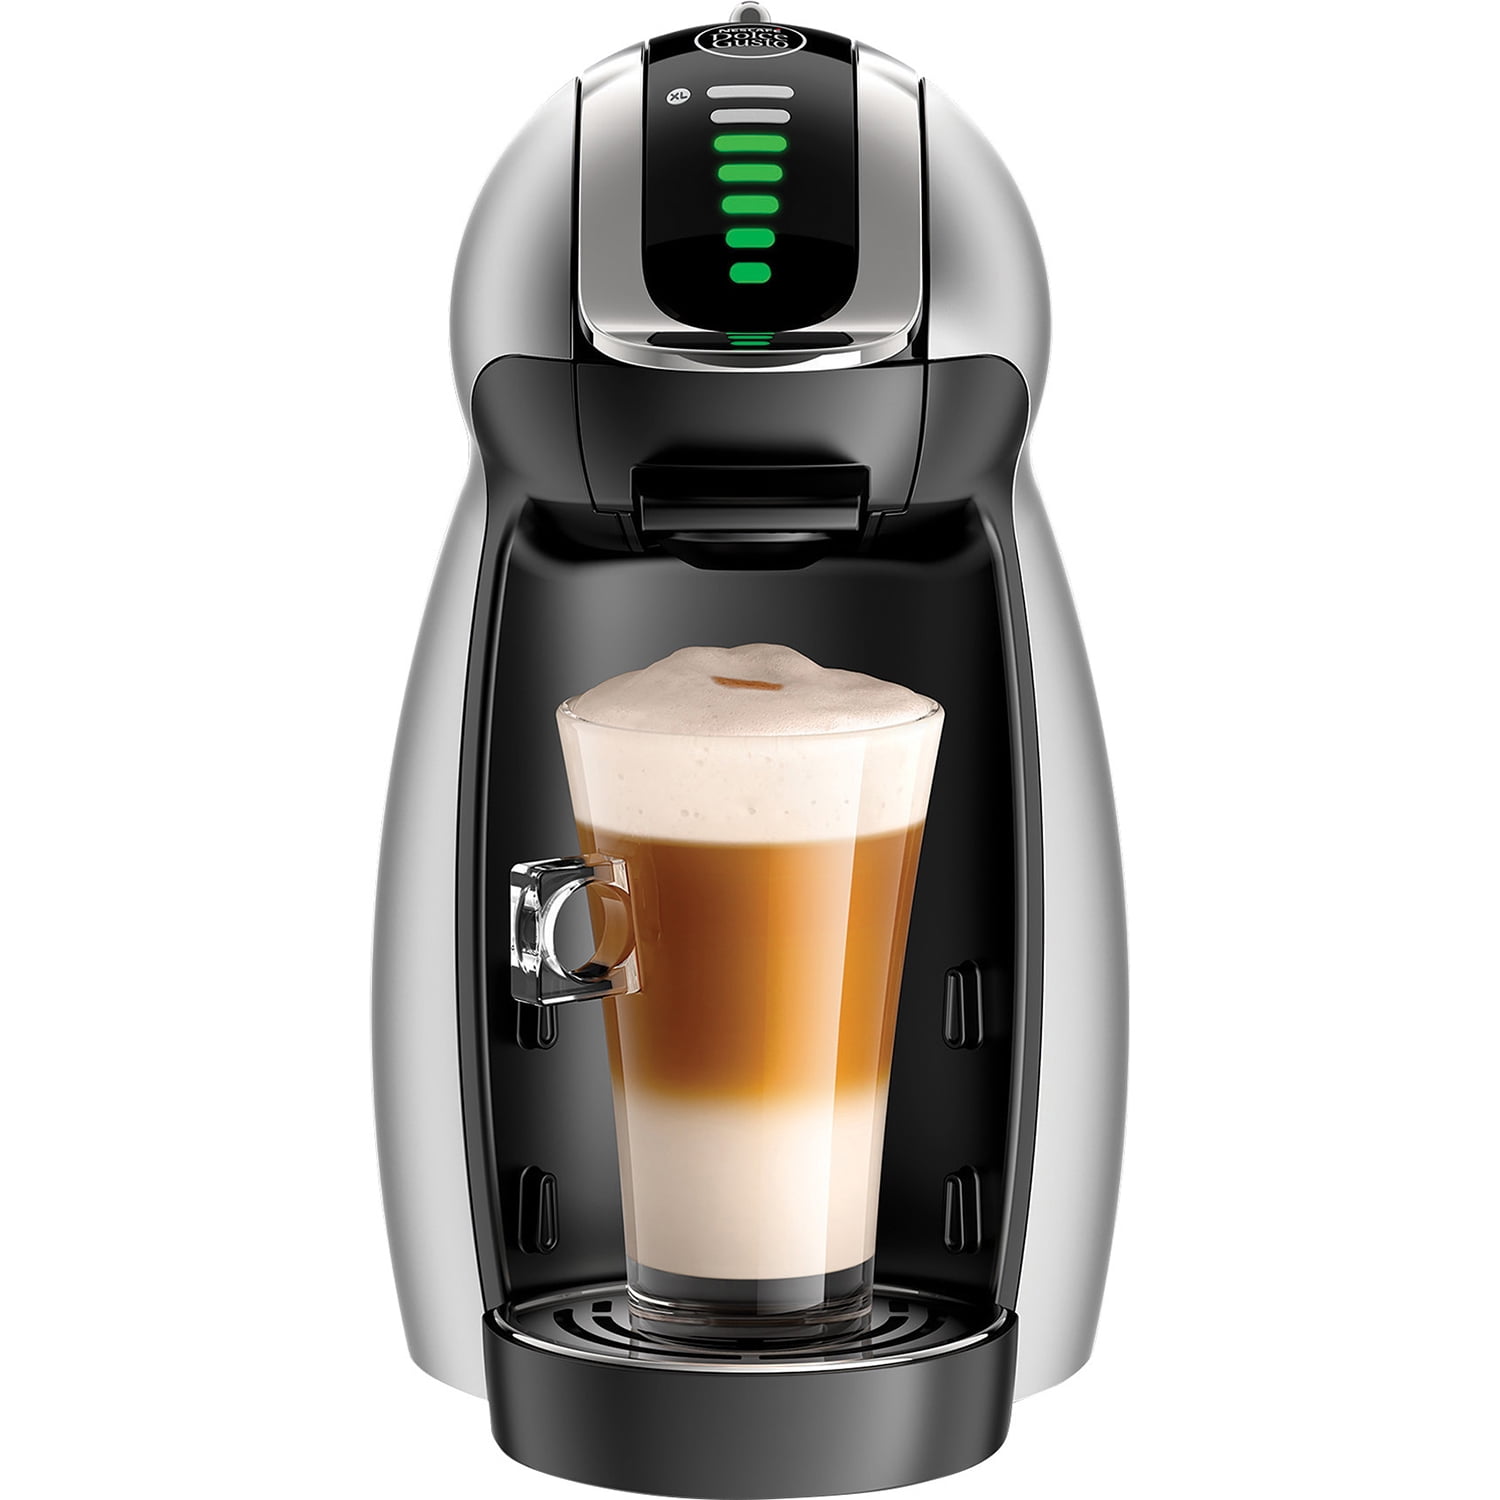 Mixpresso Dolce Gusto Machine, Latte Machine Red & Black Cappuccino Machine  Compatible With Nescafe Dolce Gusto, Red Coffee Maker